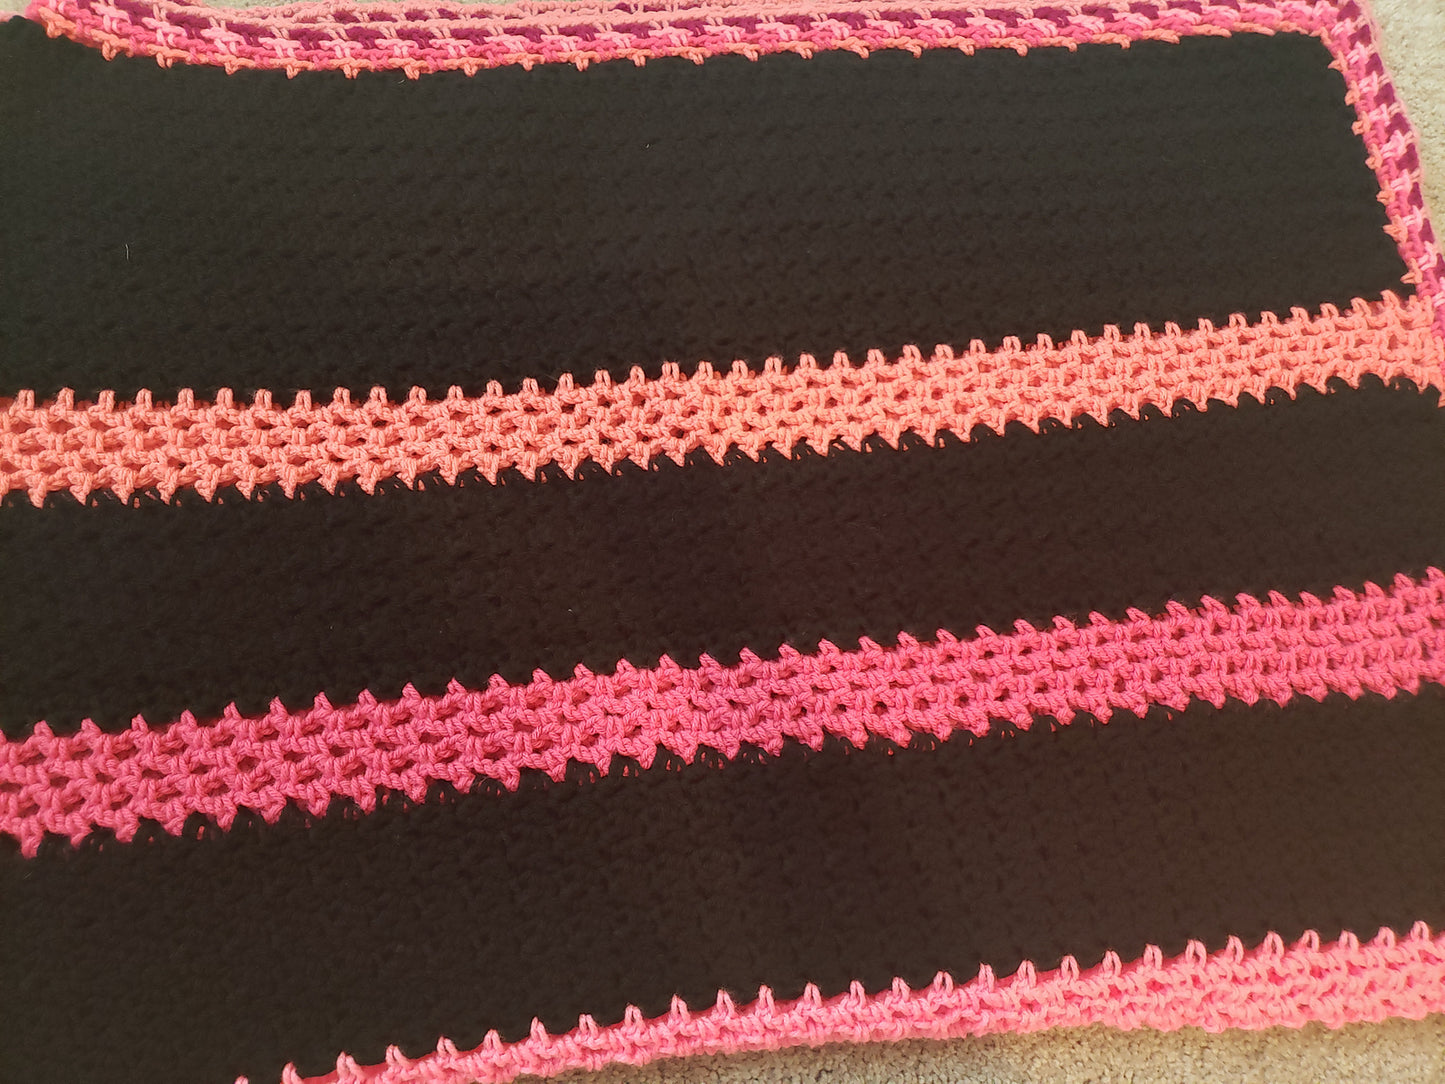 Crochet Pattern: Girl Talk Afghan